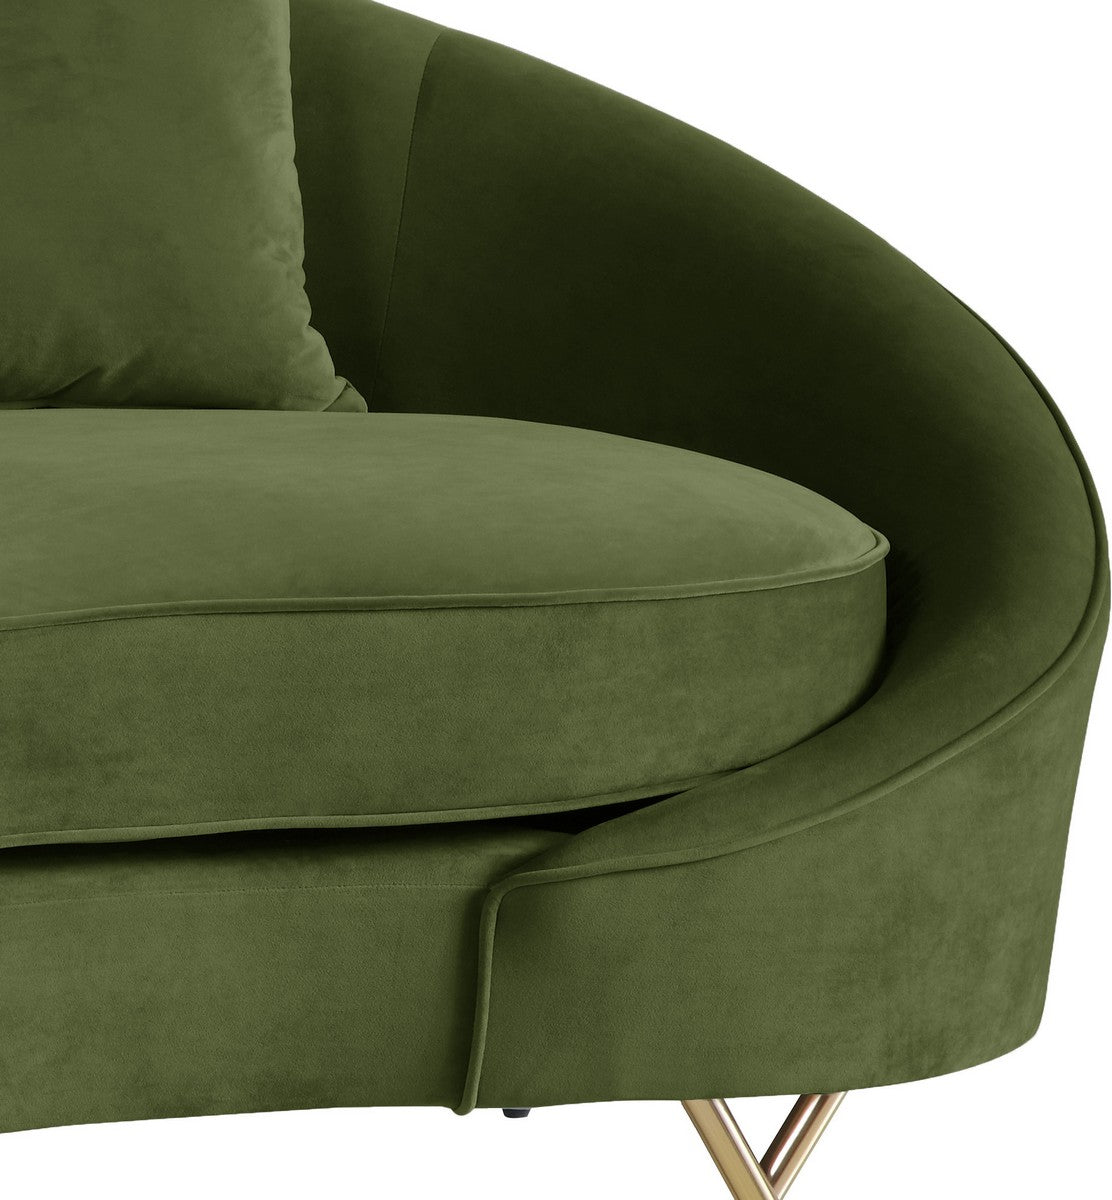 Meridian Furniture Serpentine Olive Velvet Sofa